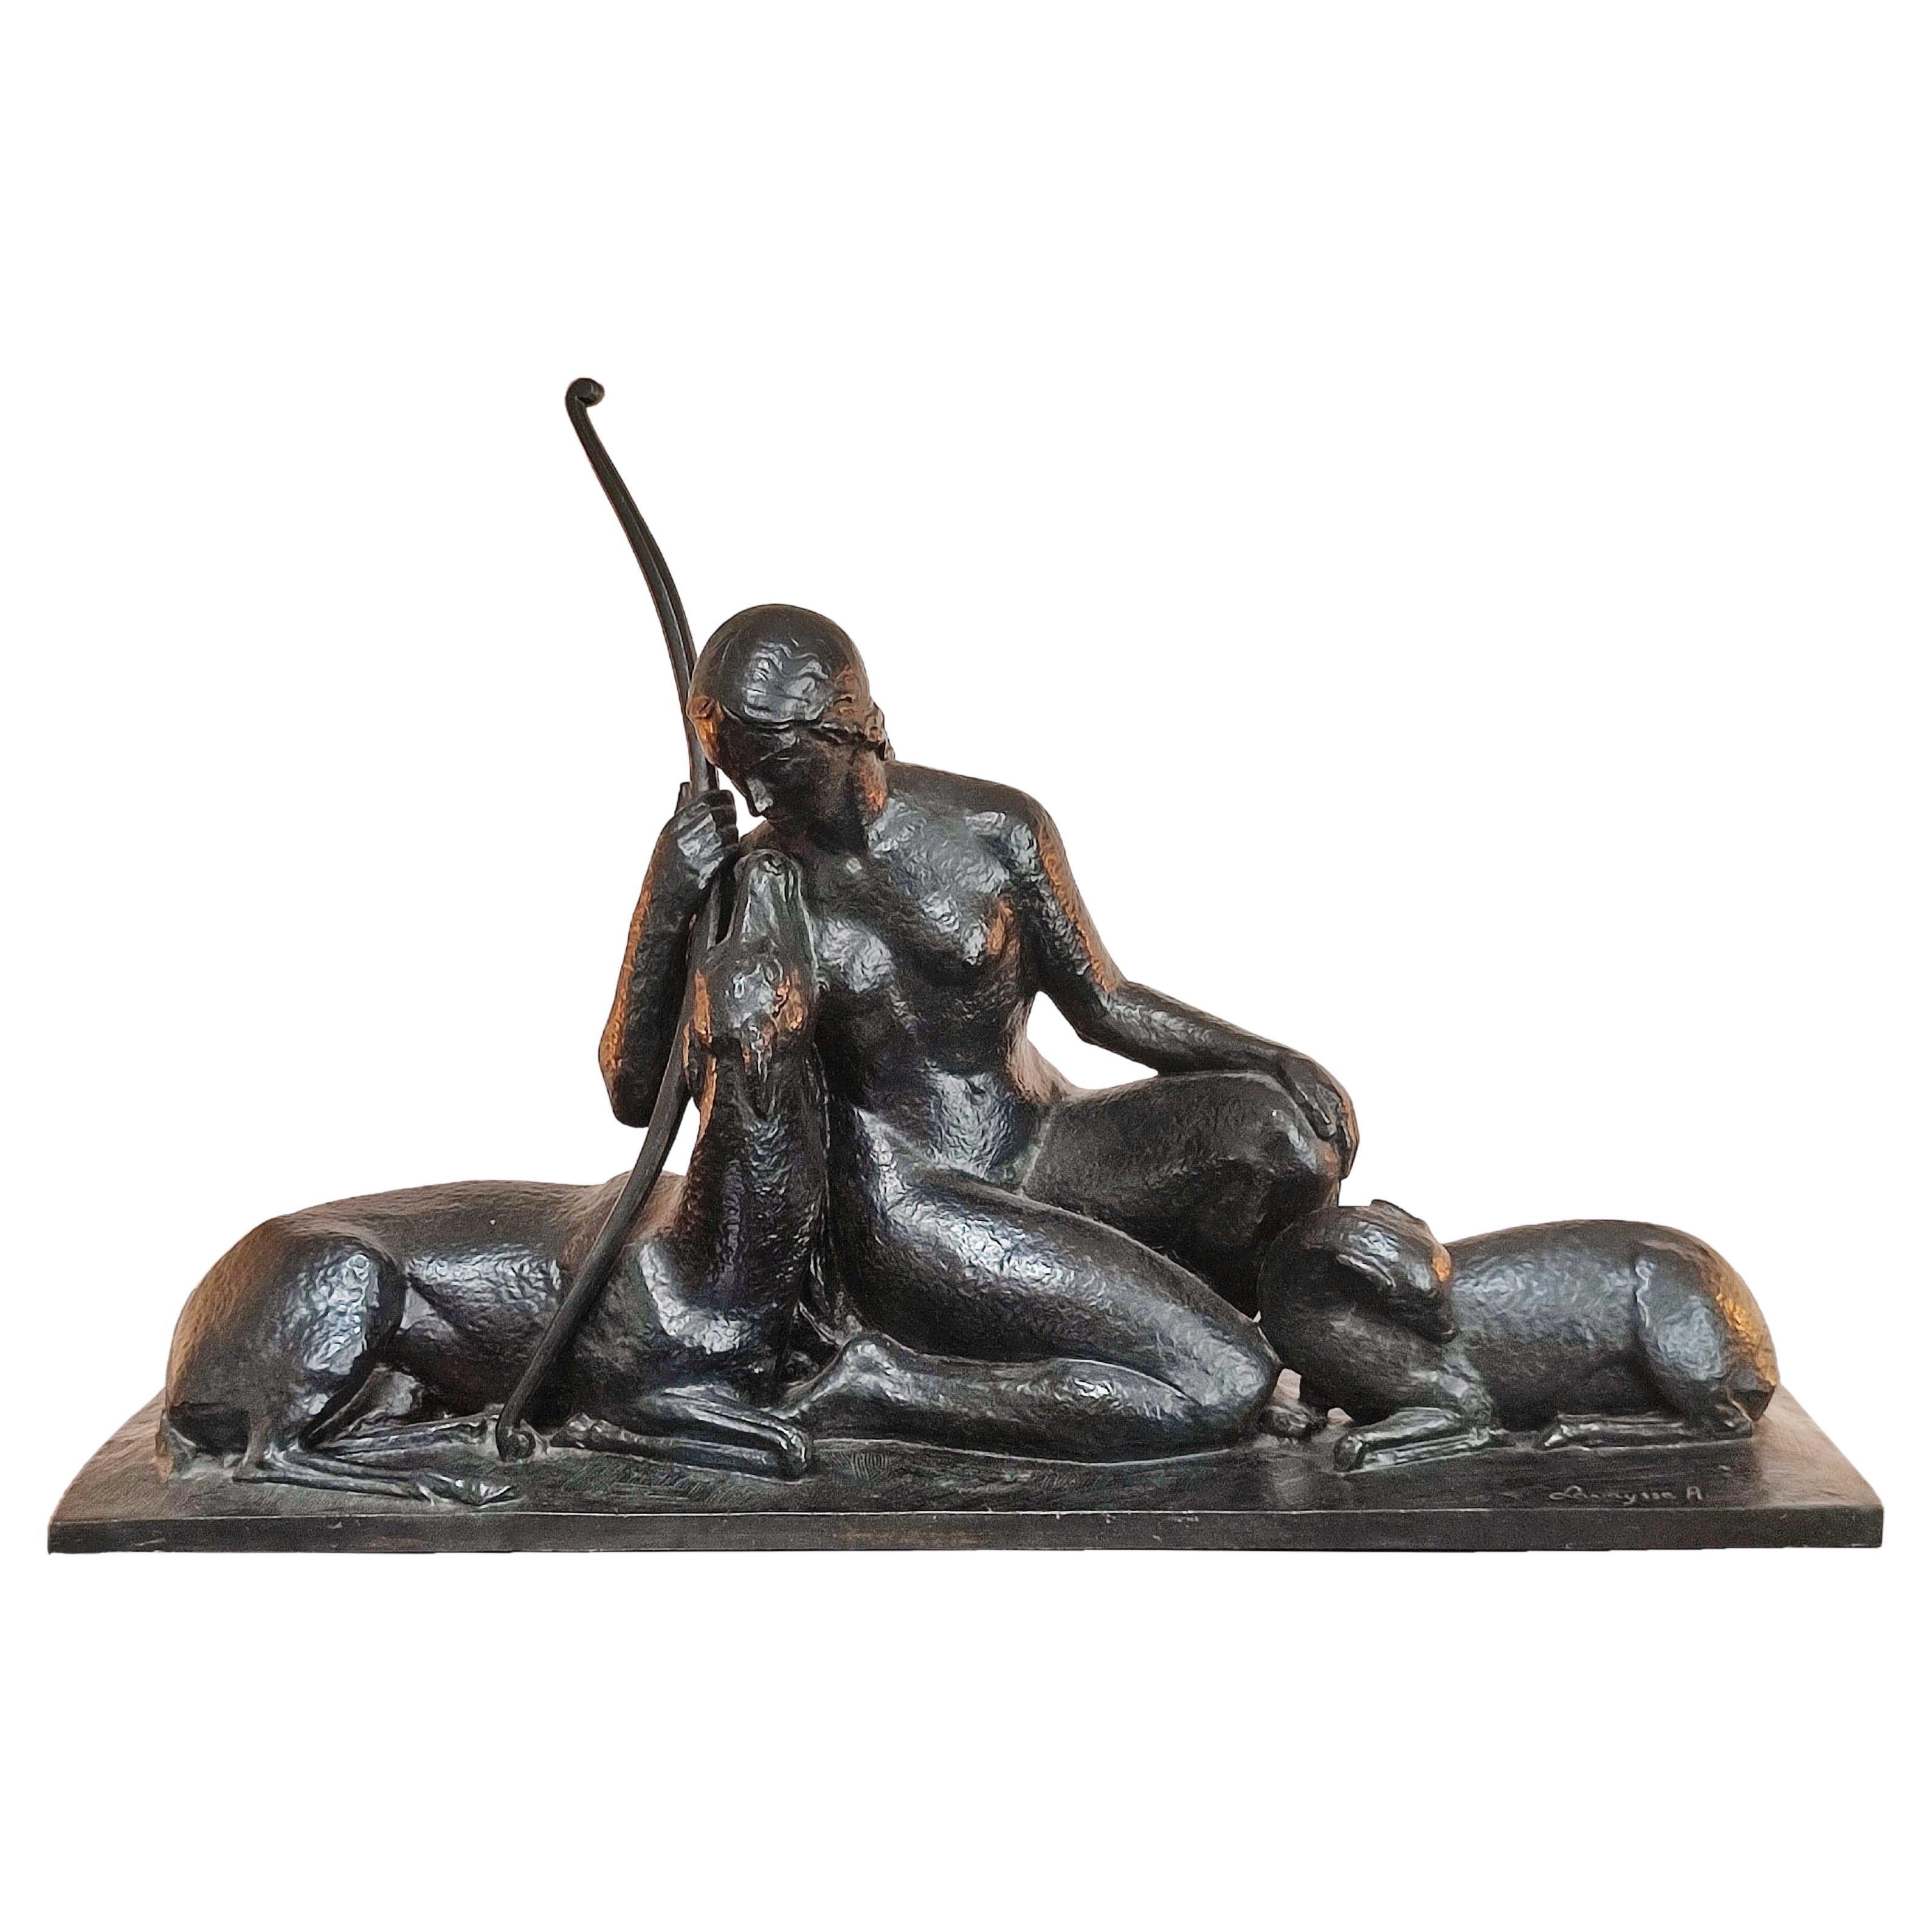 Bronzeskulptur der Jagd Göttin der Jagd im Art déco-Stil von Andre Lavaysse, Susse Freres